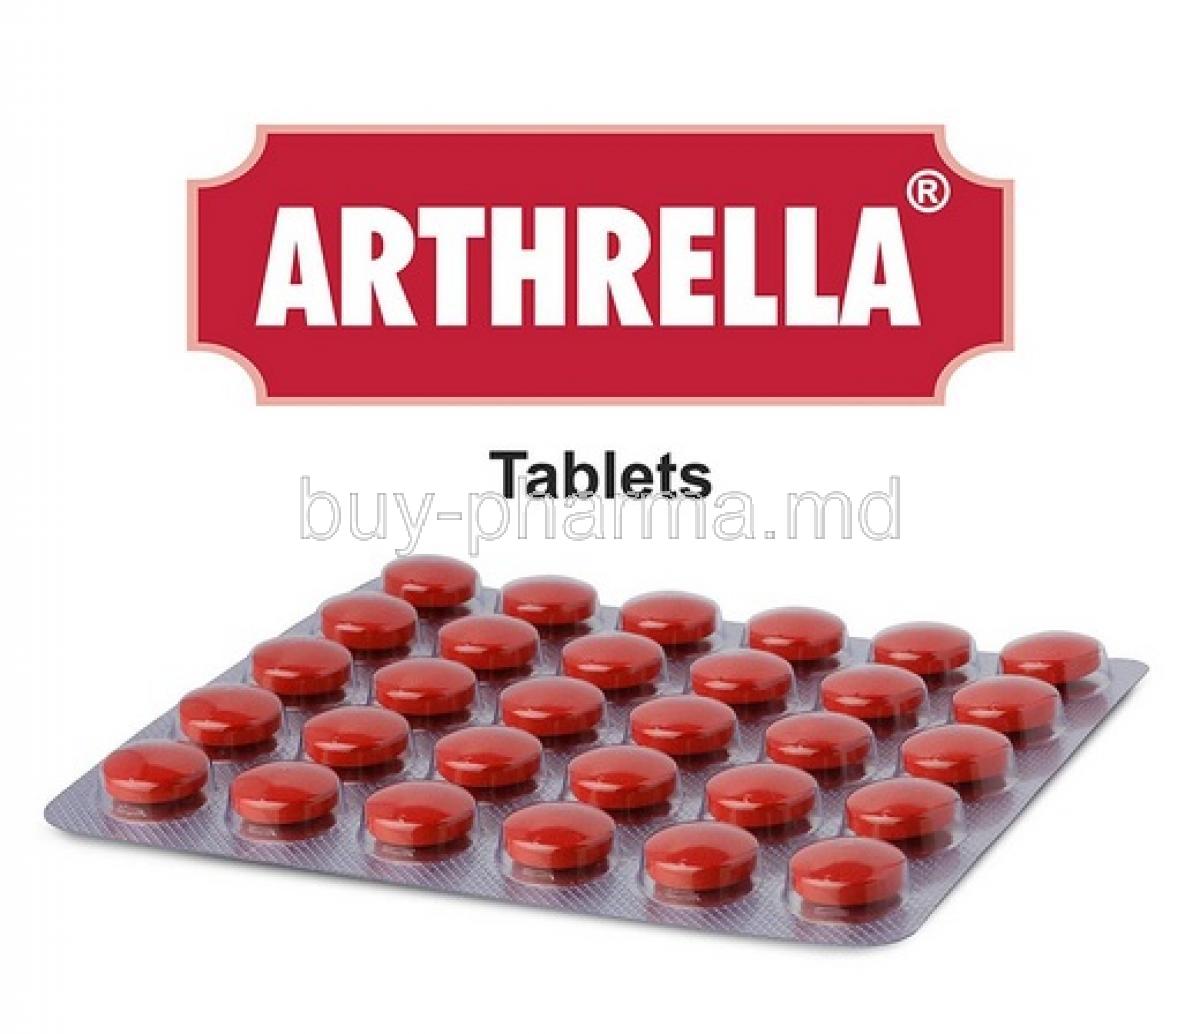 Arthrella box and tablets